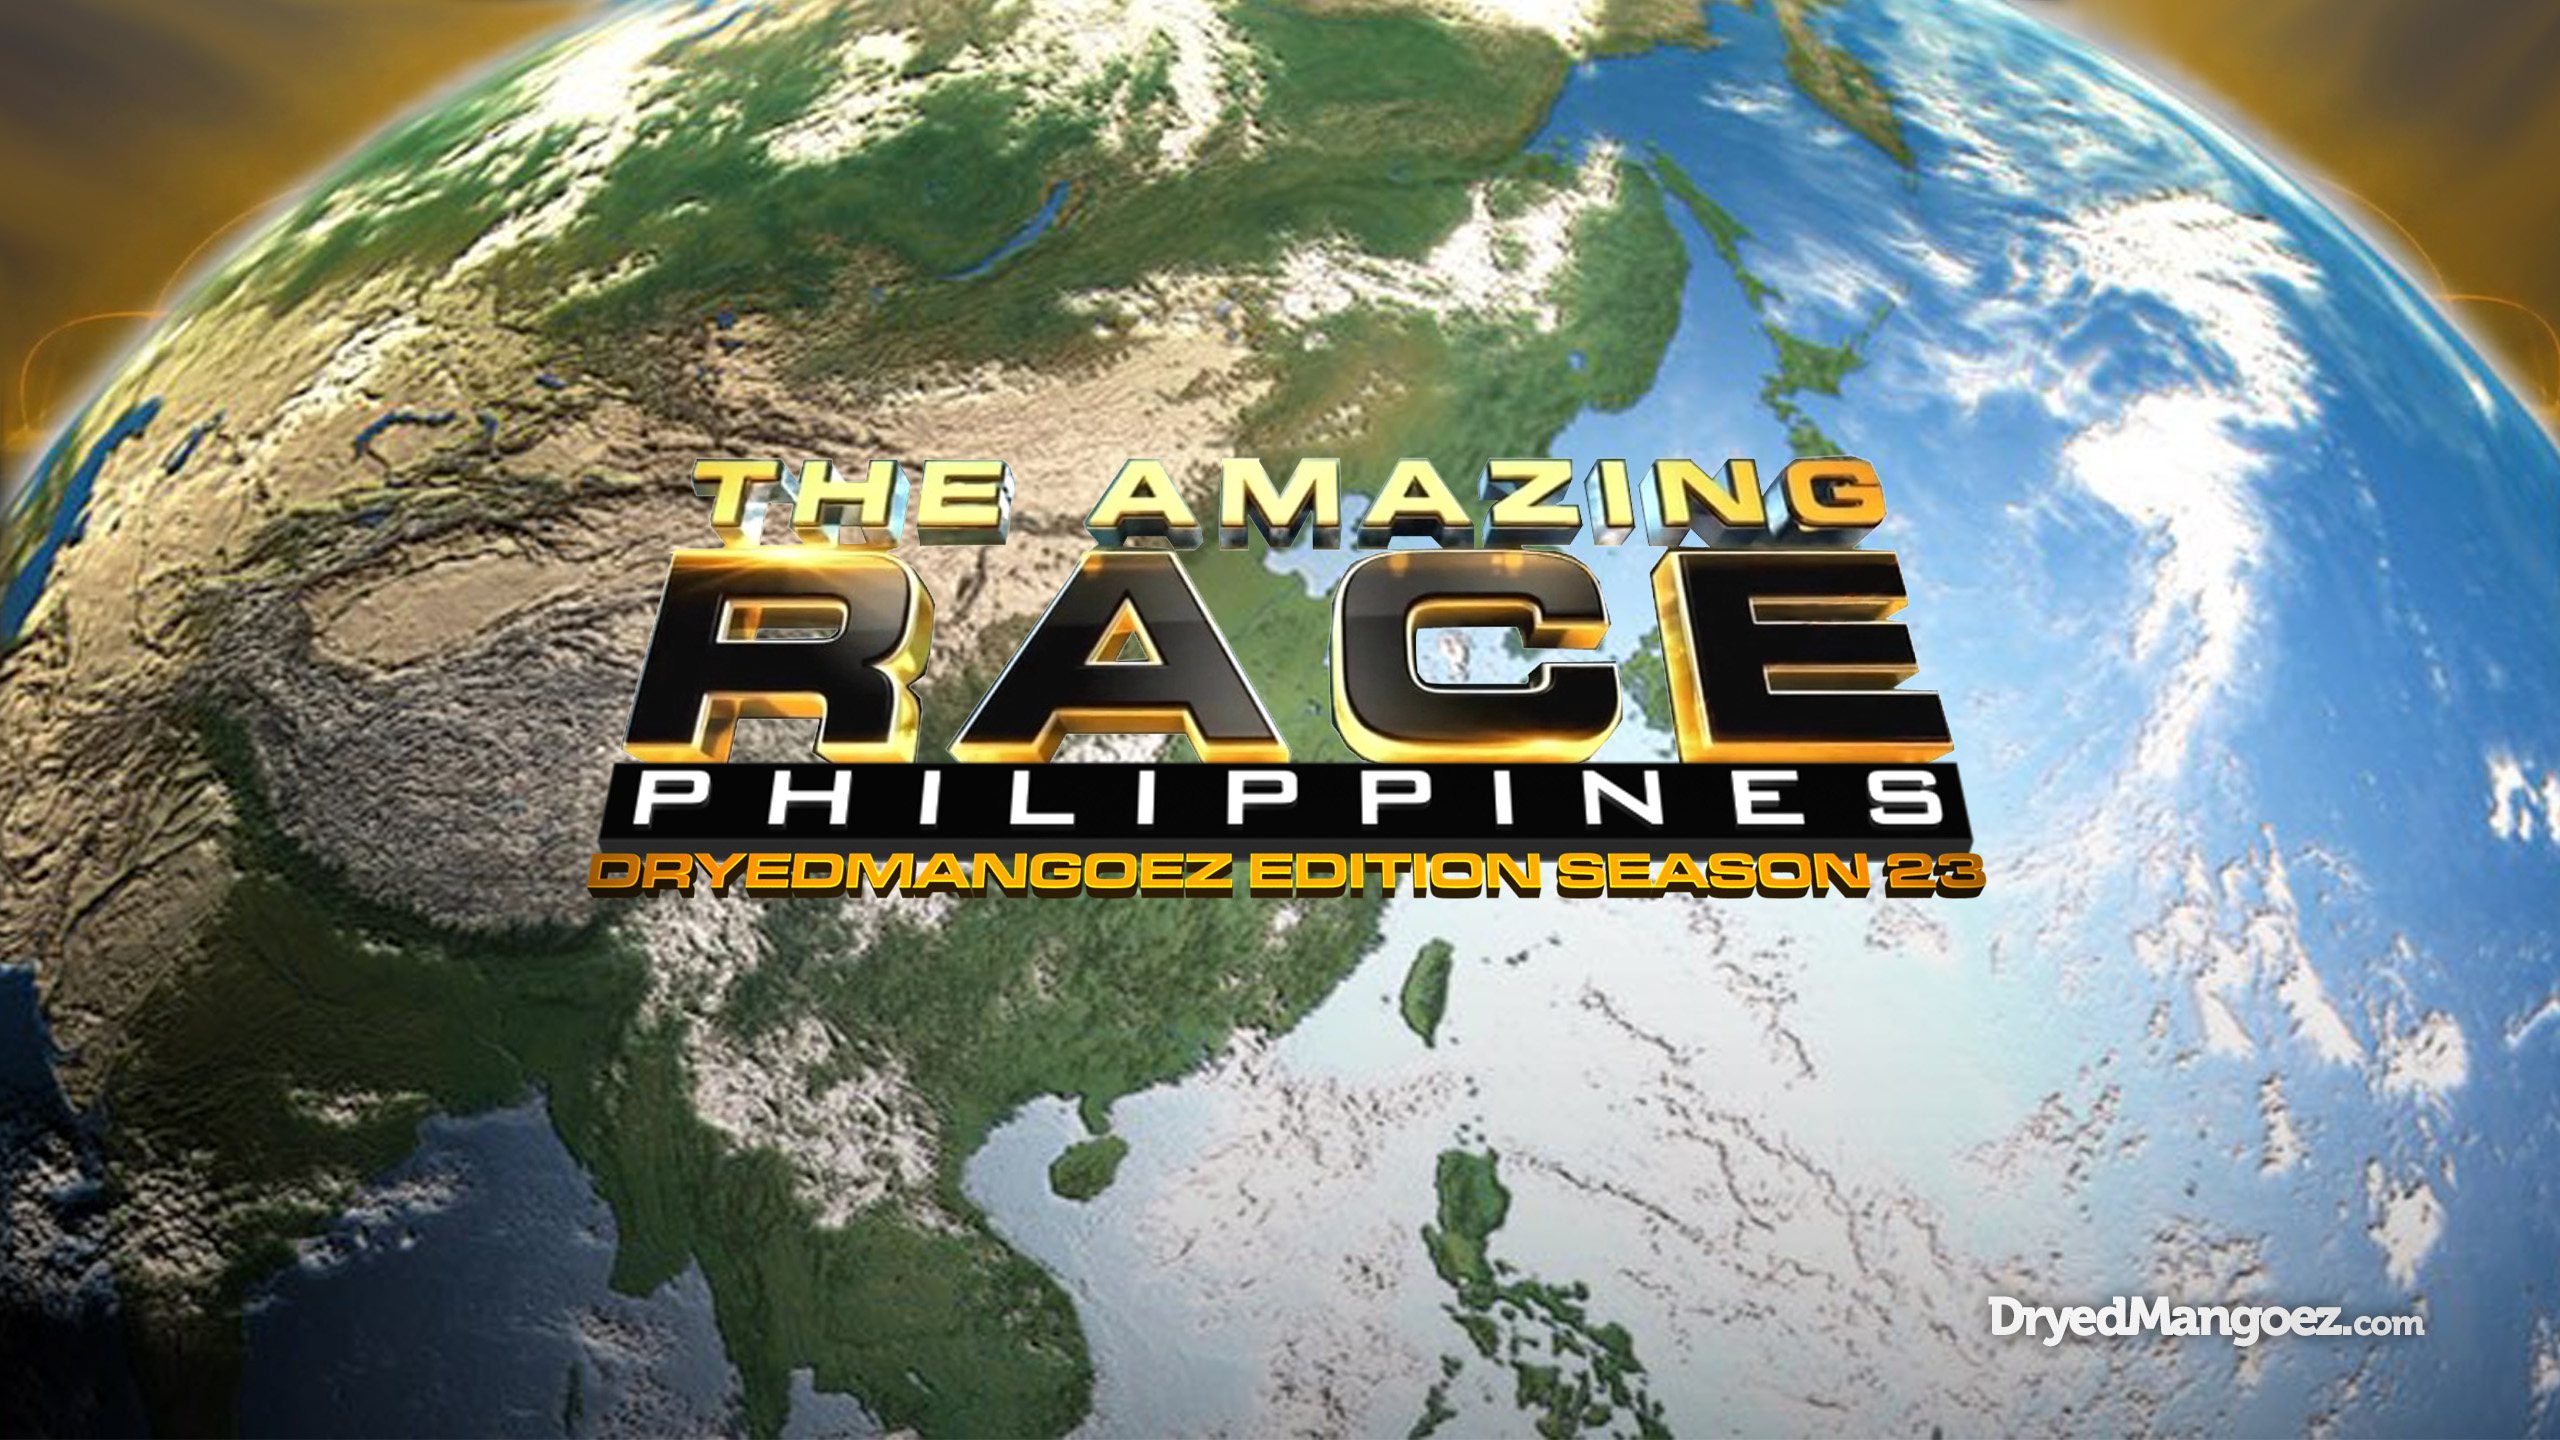 The Amazing Race Philippines: DryedMangoez Edition Season 23